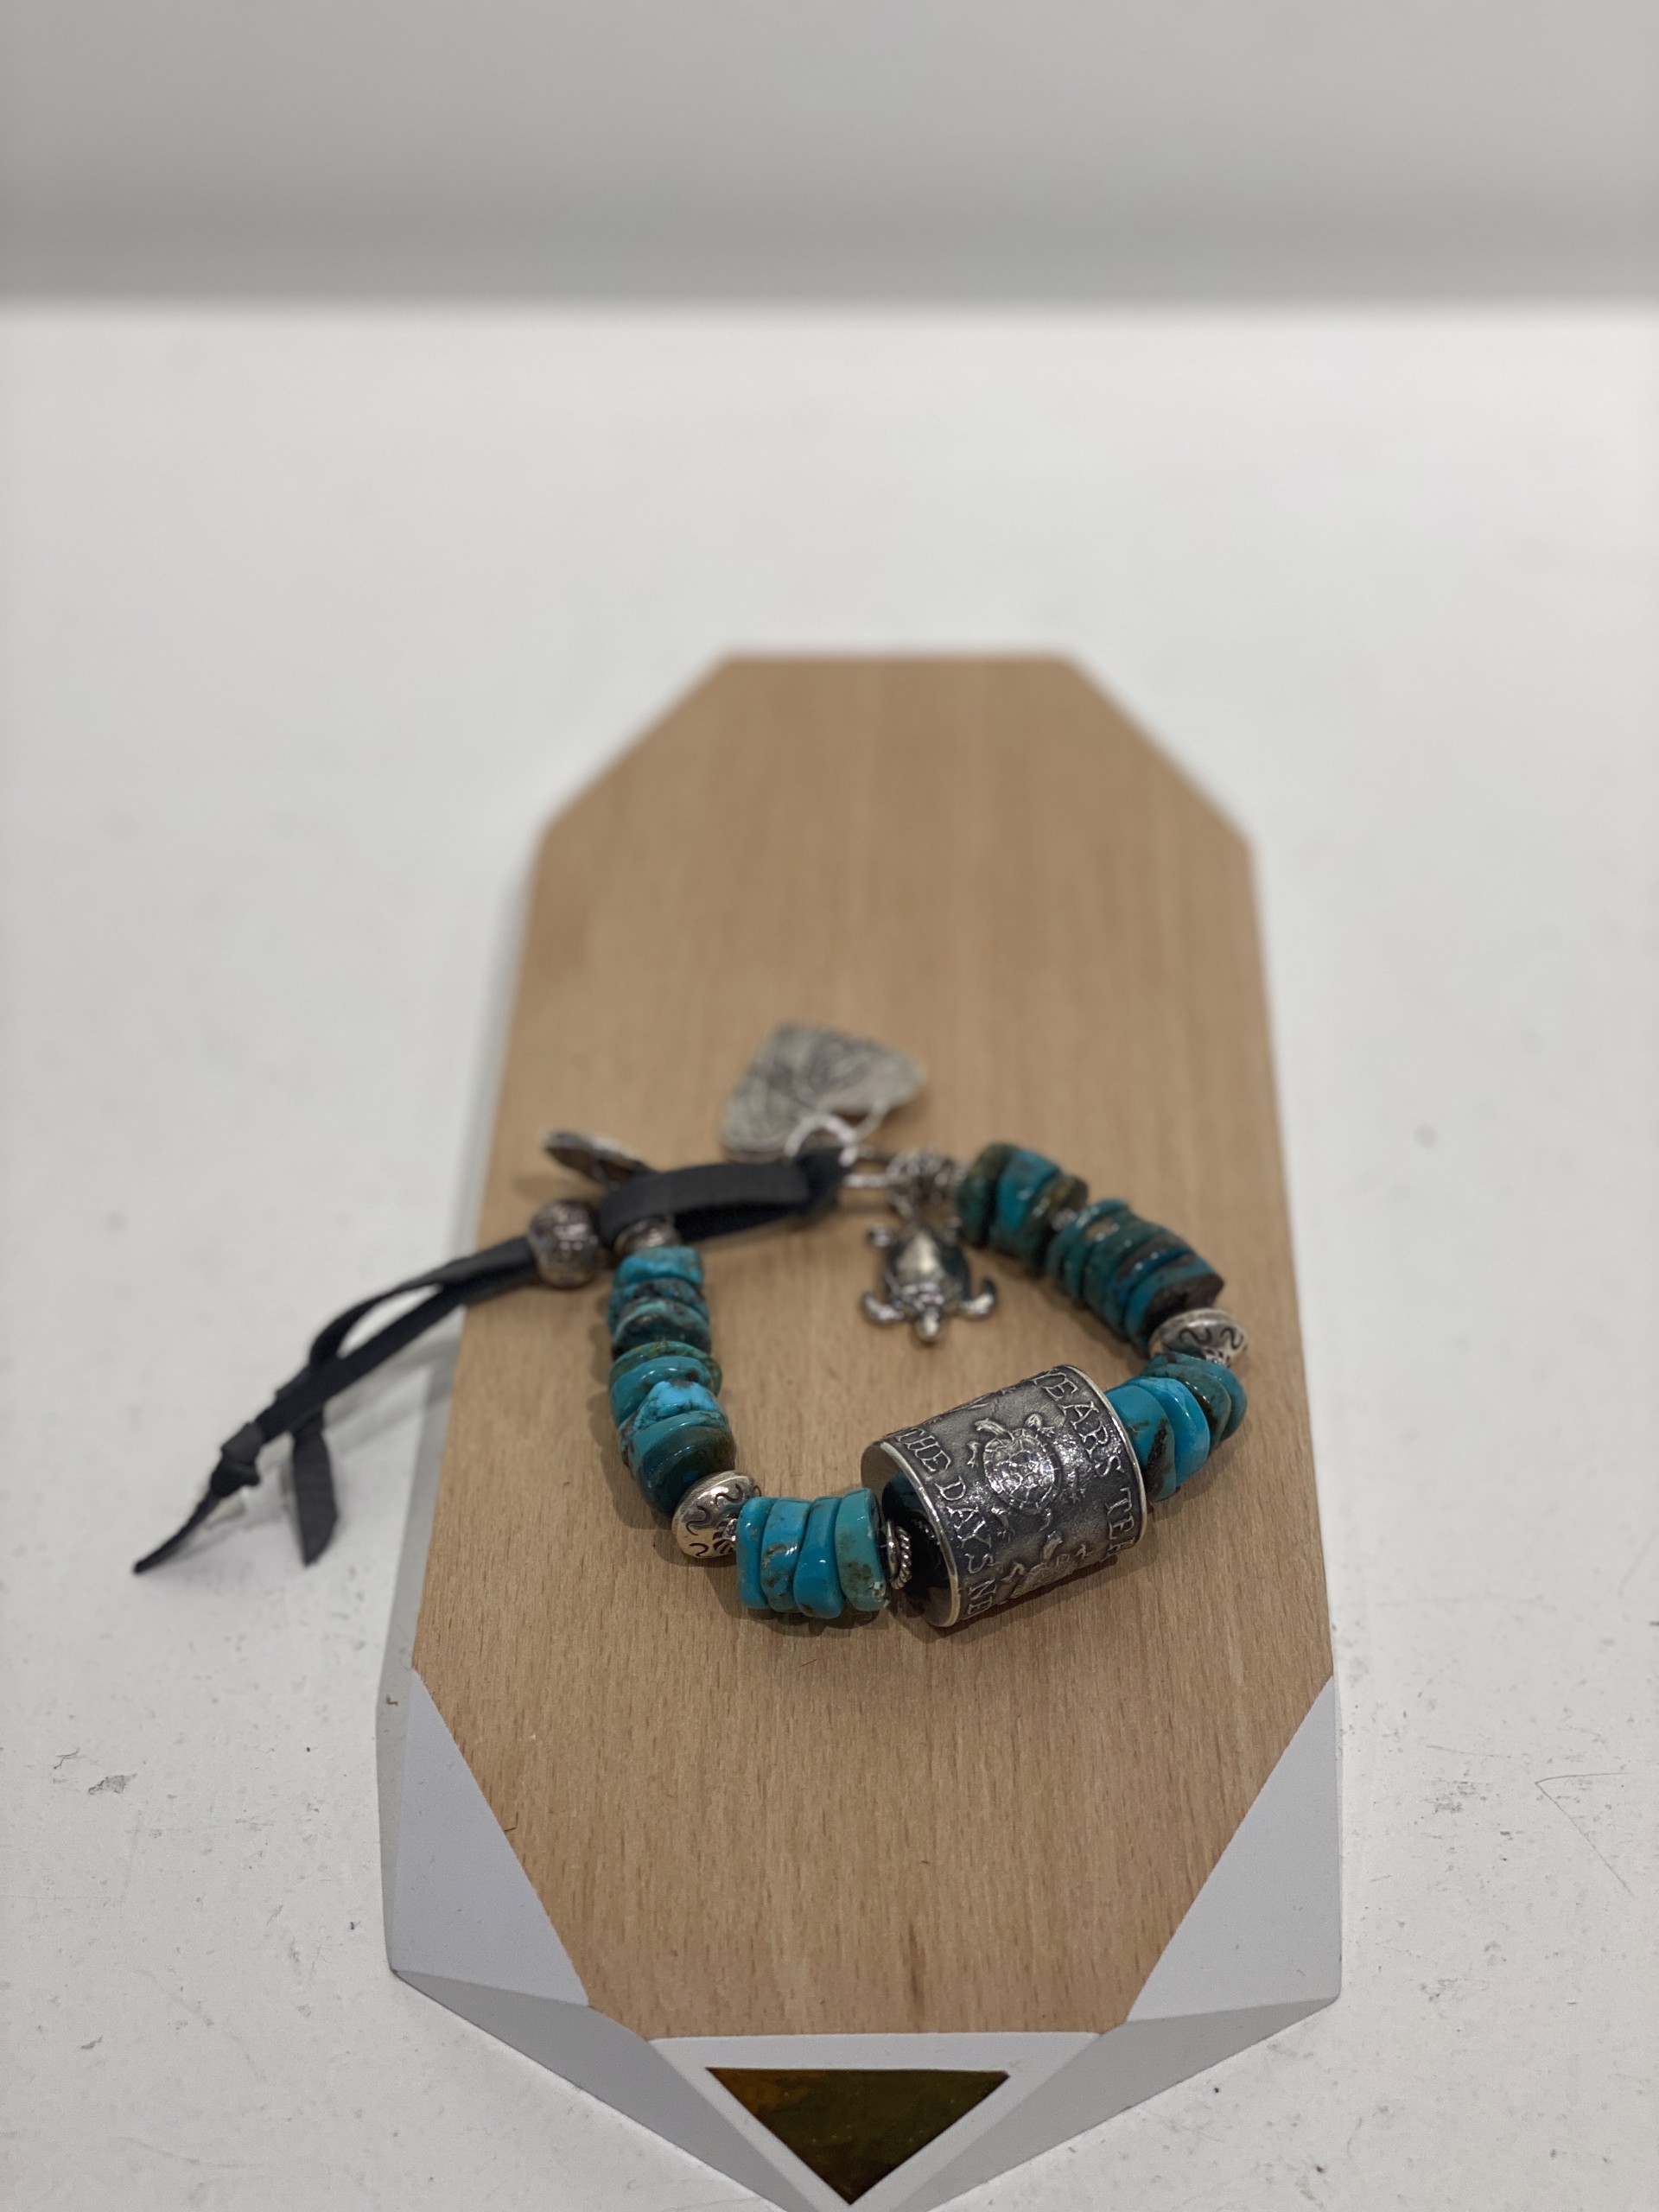 Ann Choi Turtle bracelet #8 by Melissa Turney